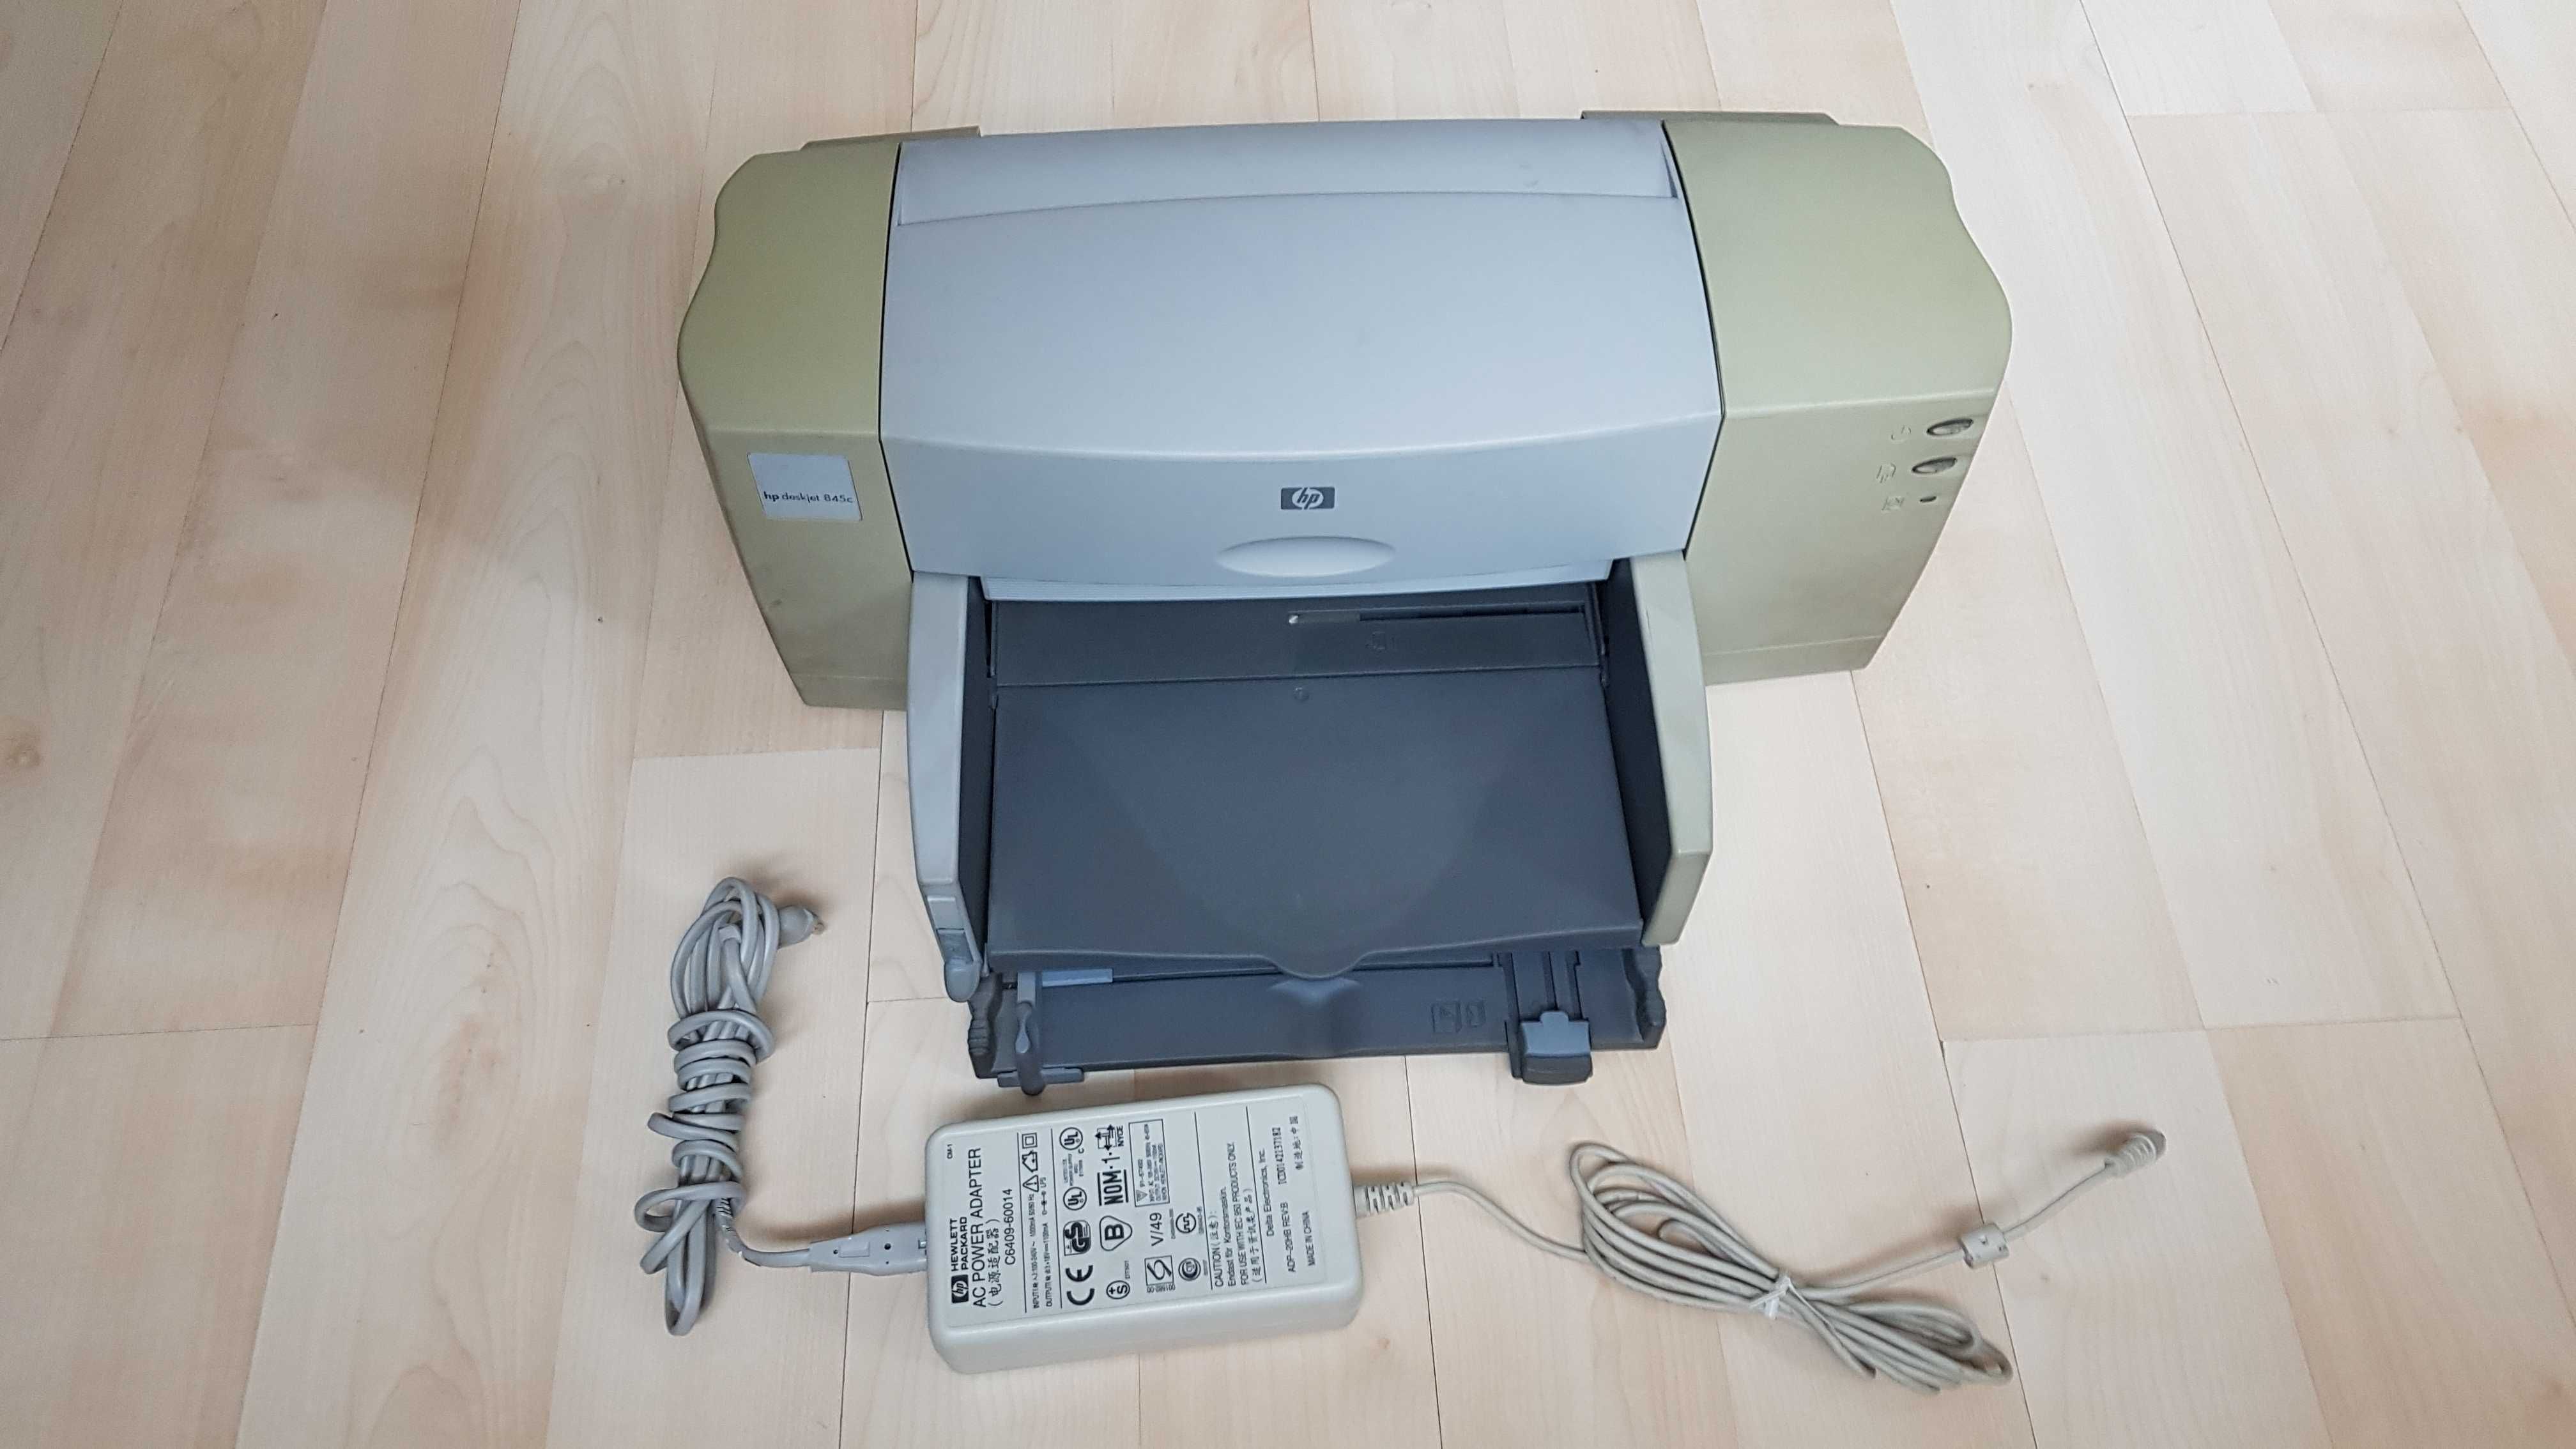 drukarka hp845c - używana - brak tuszu